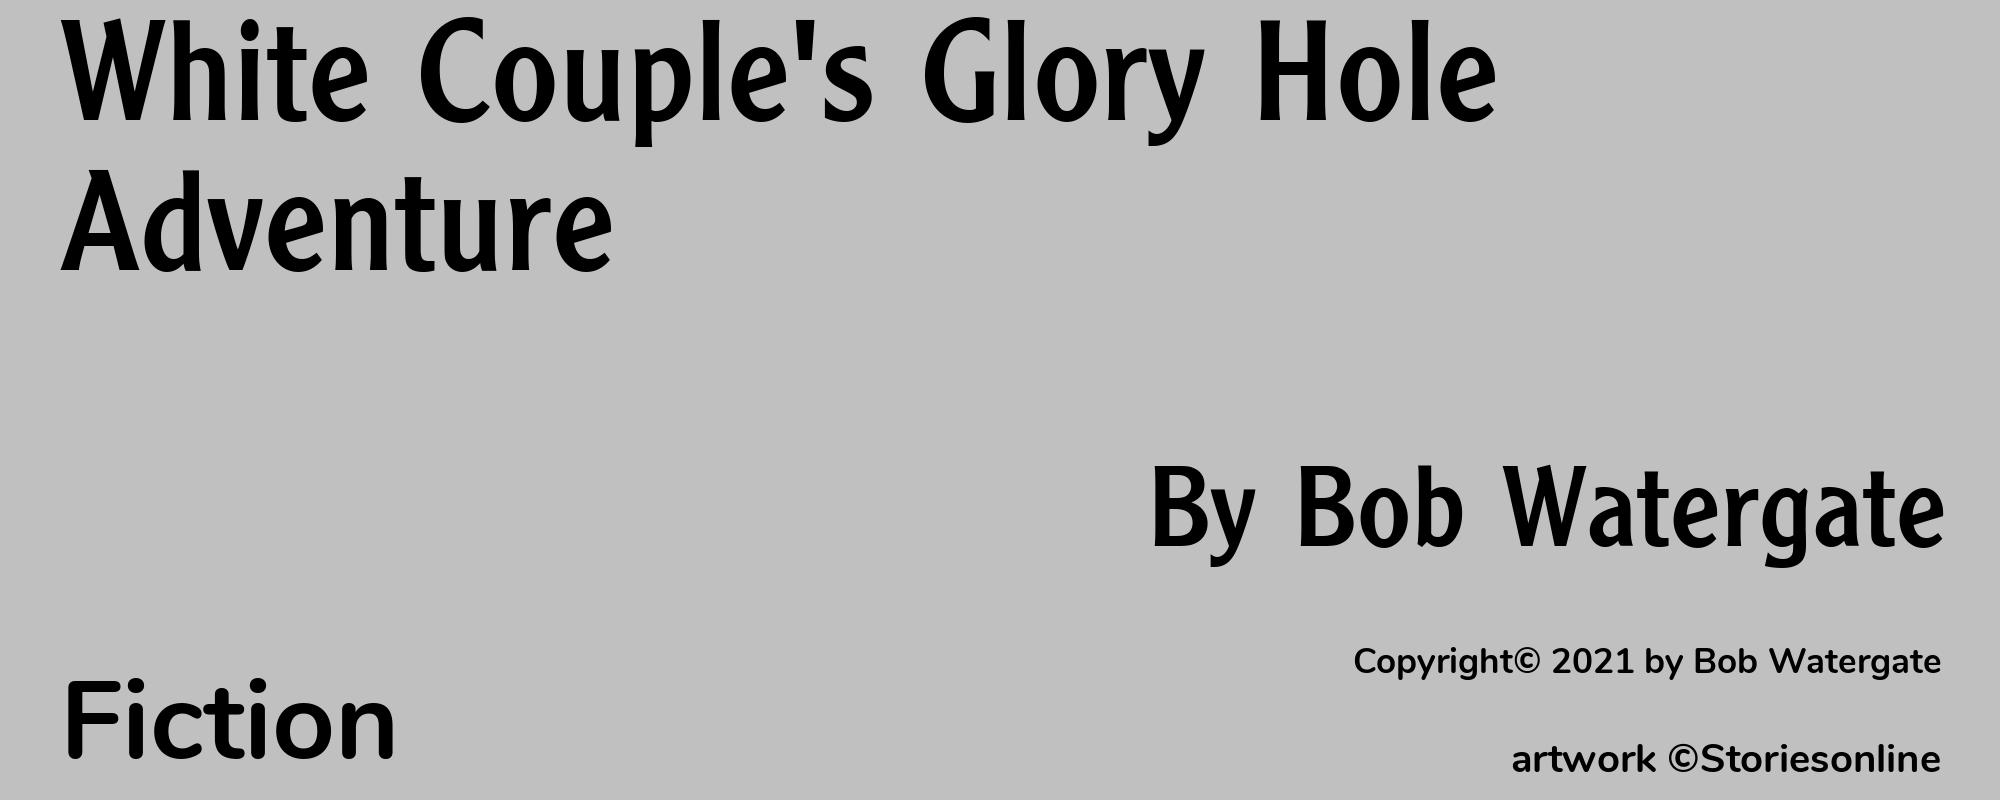 White Couple's Glory Hole Adventure - Cover